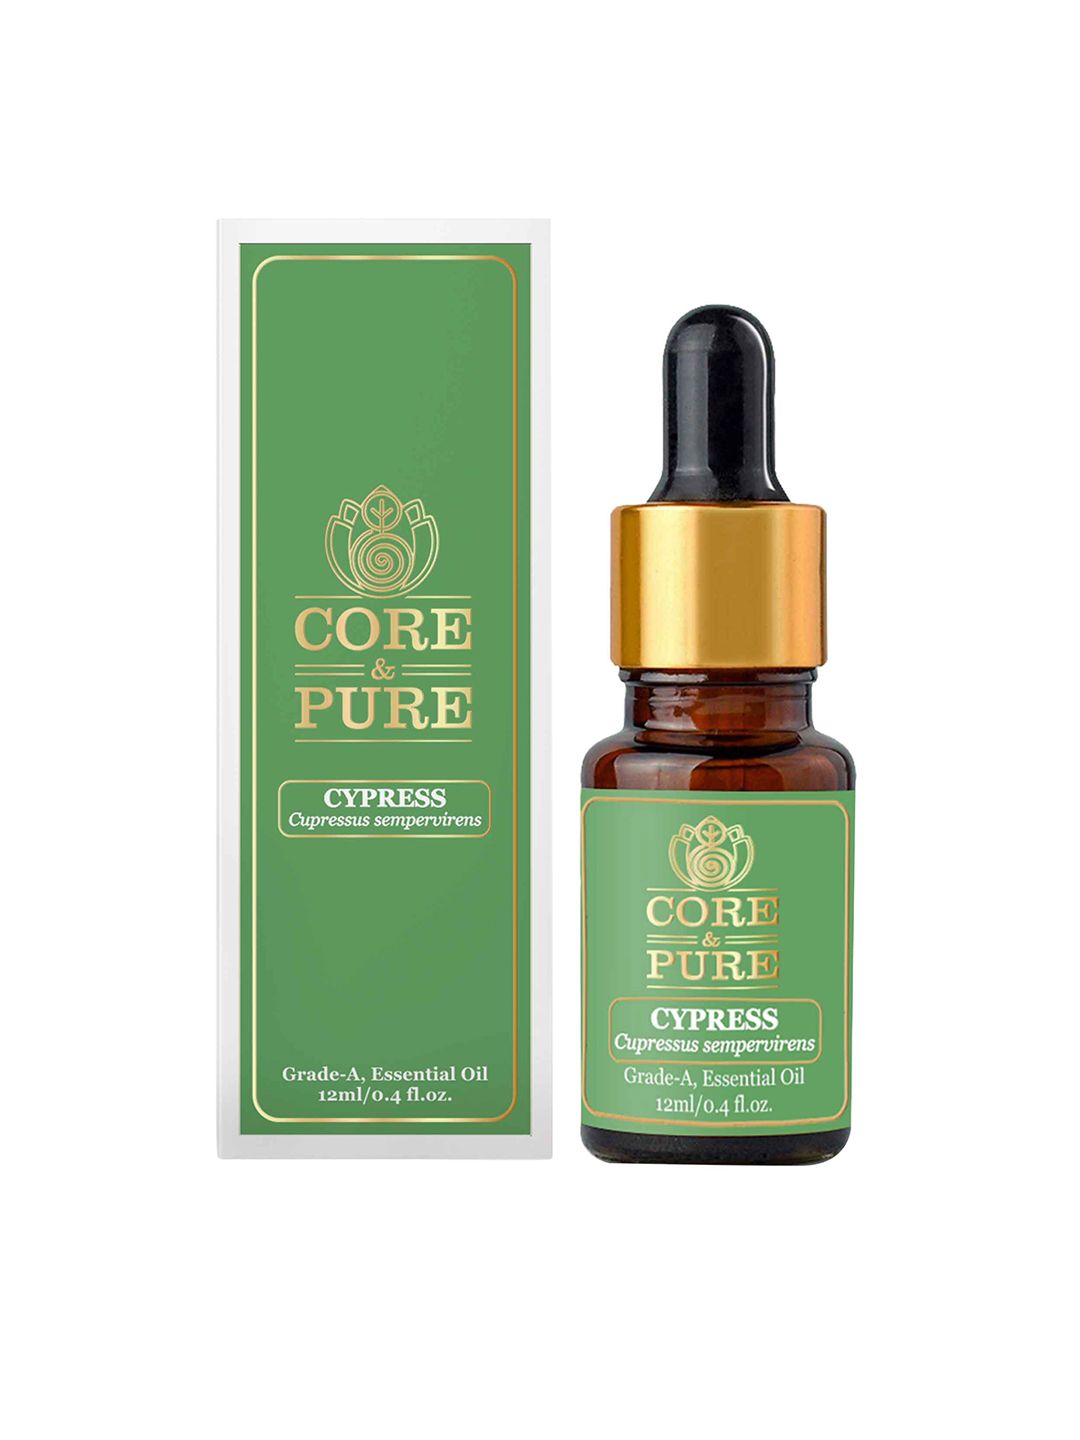 CORE & PURE Cypress Grade-A Essential Oil 12ml Price in India